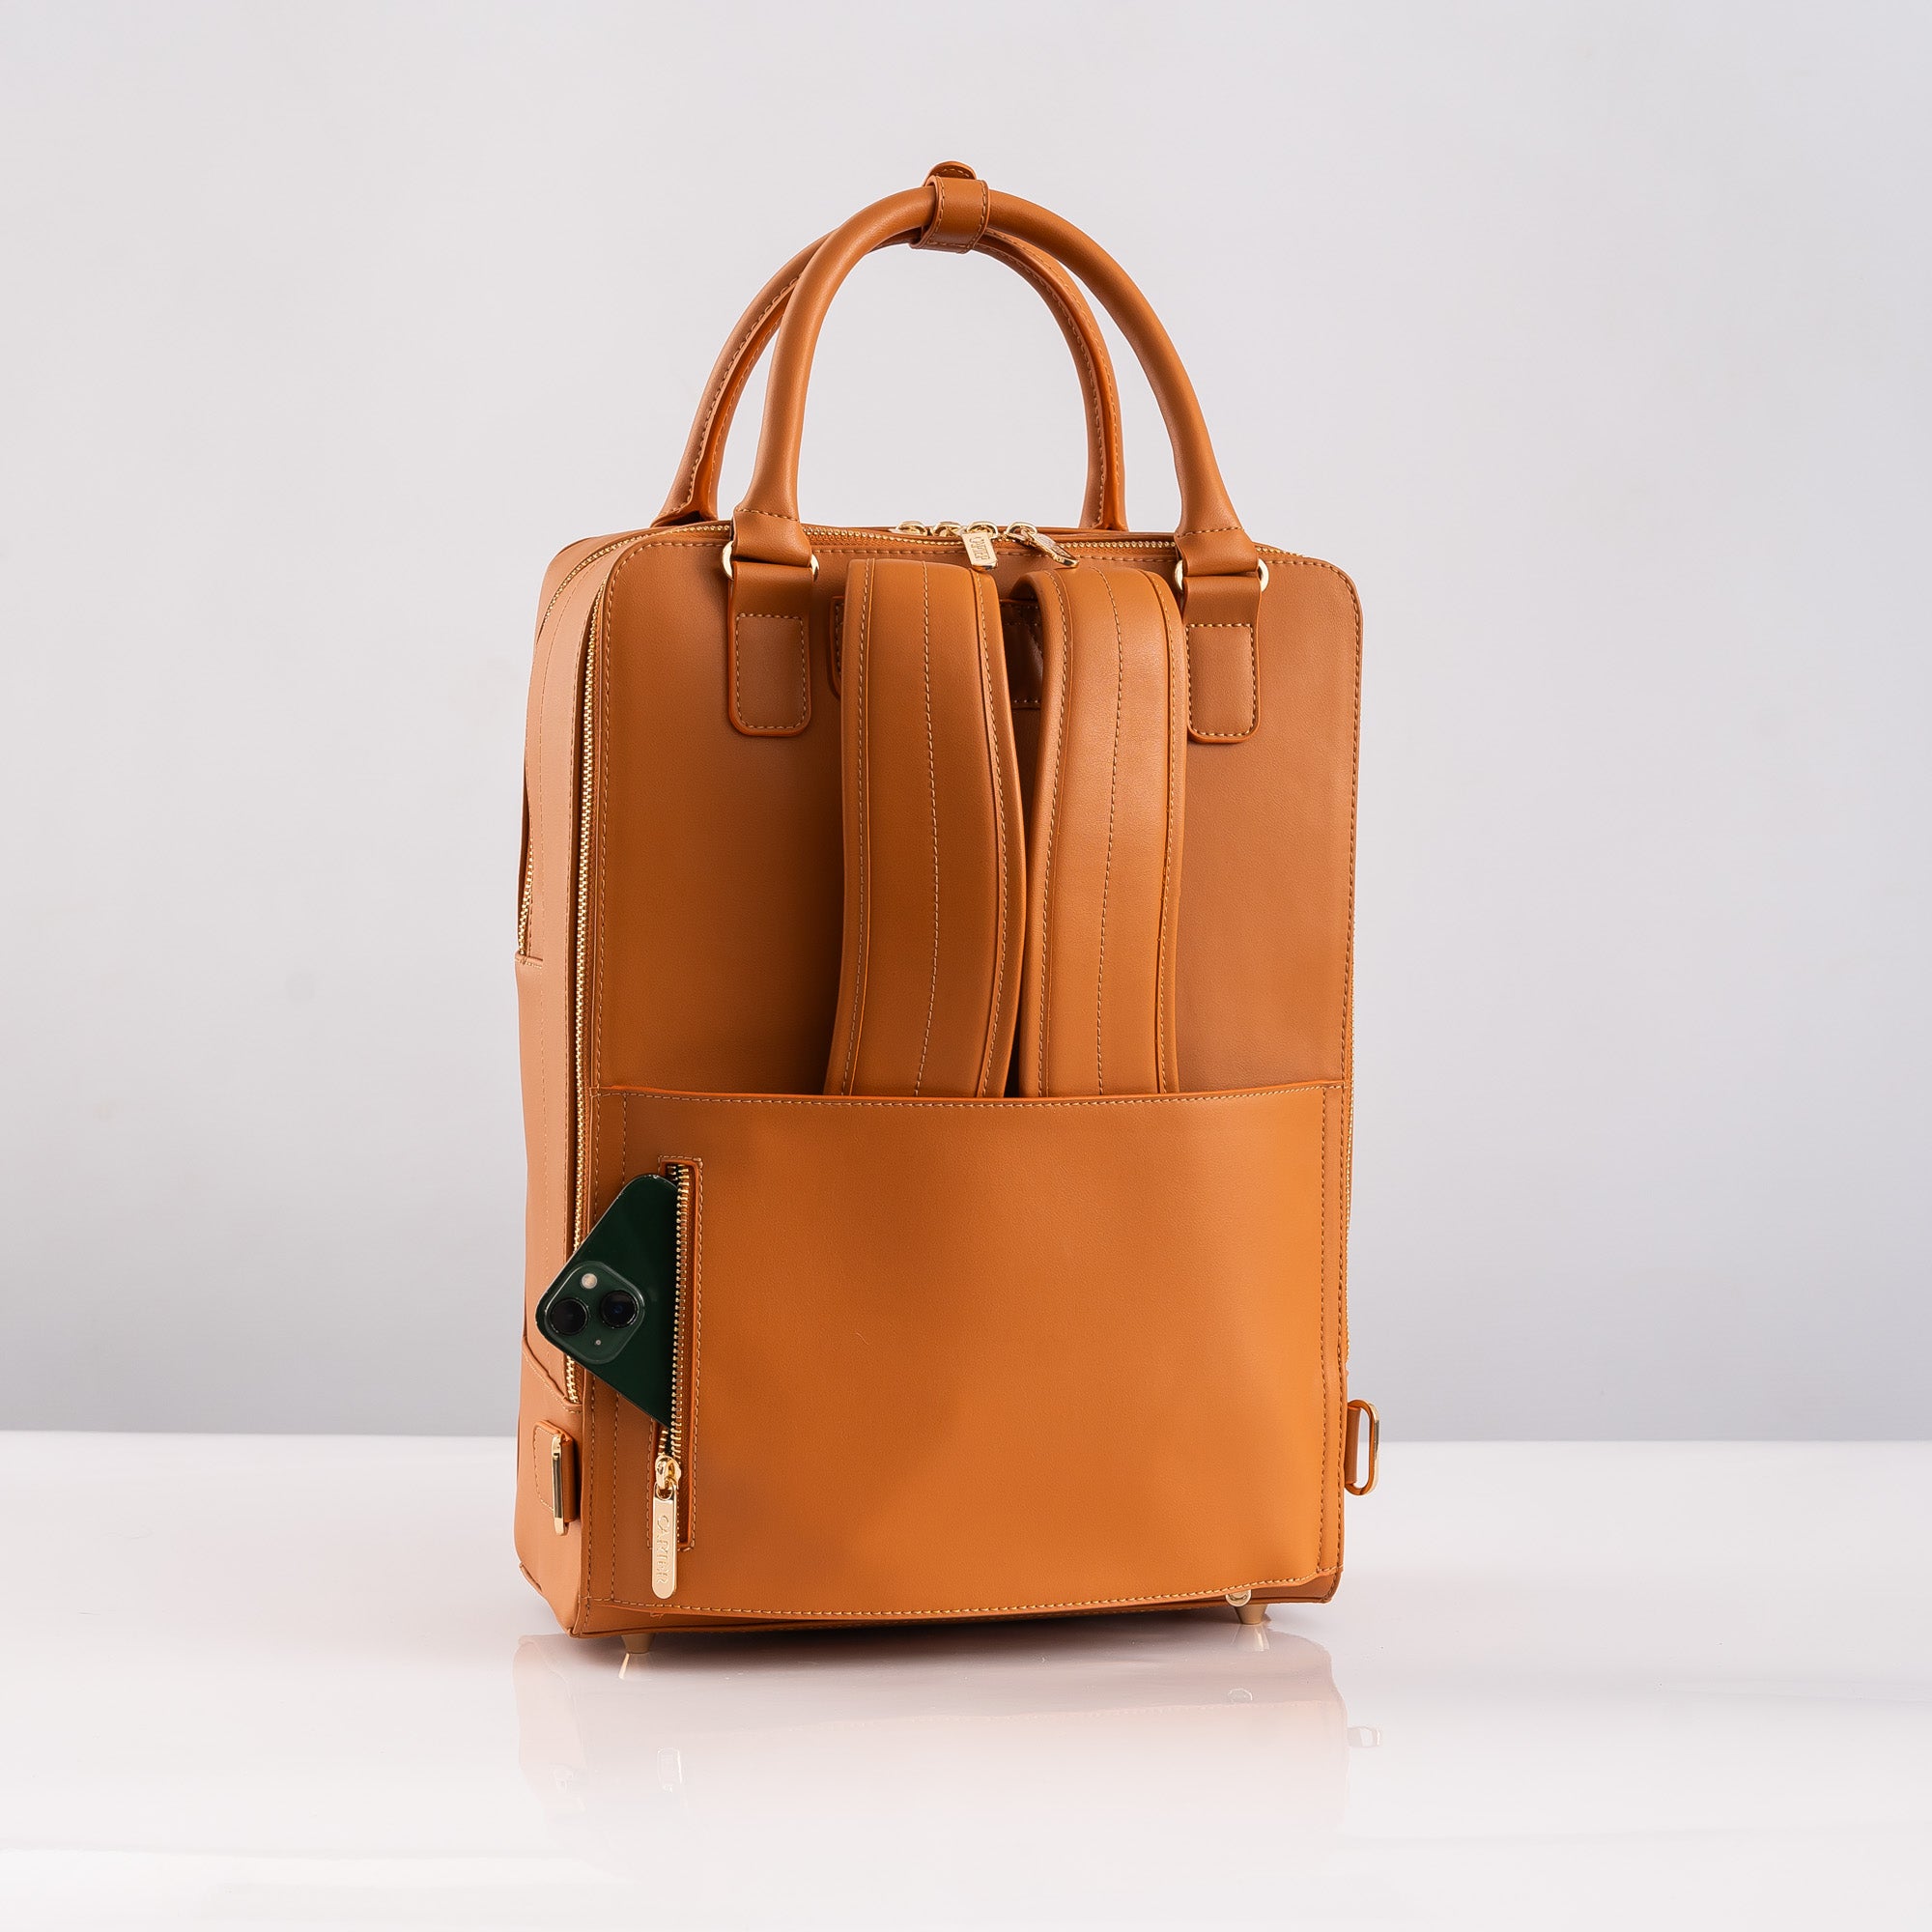 tan laptop bag with luggage strap